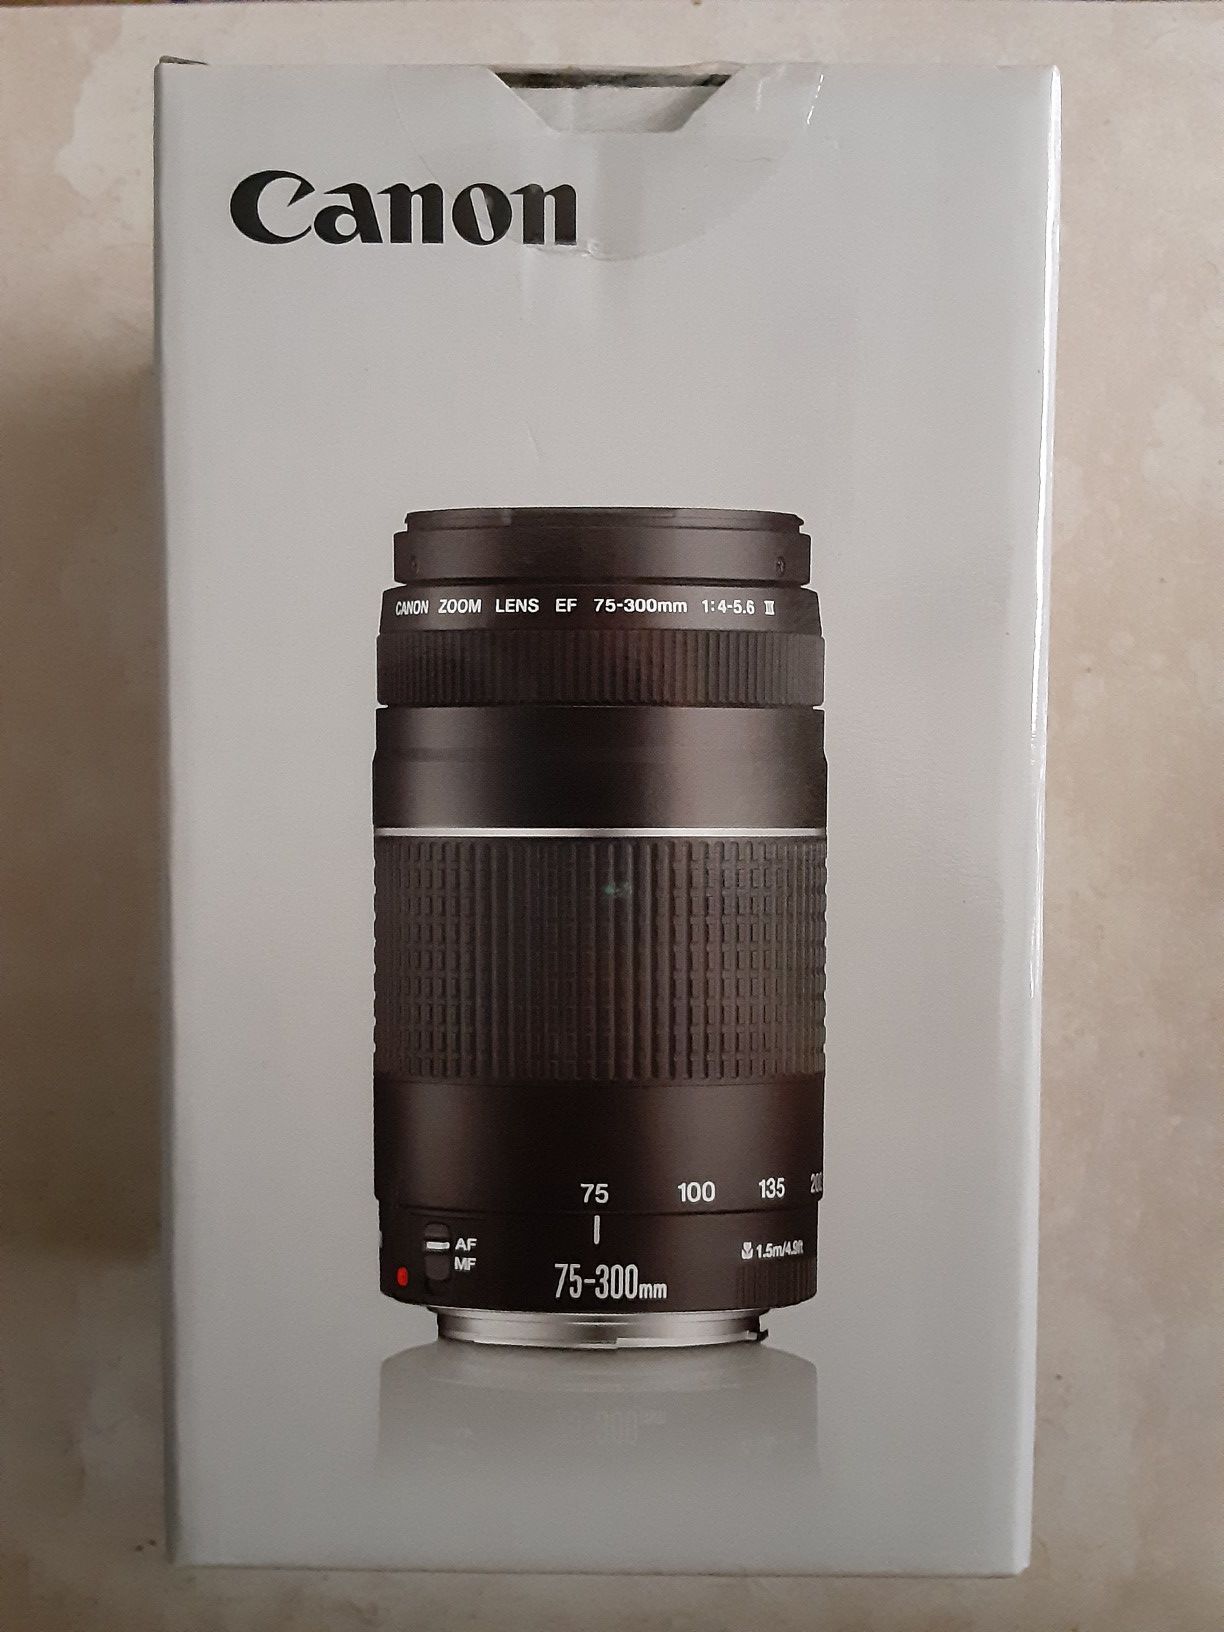 Canon Camera zoom lense